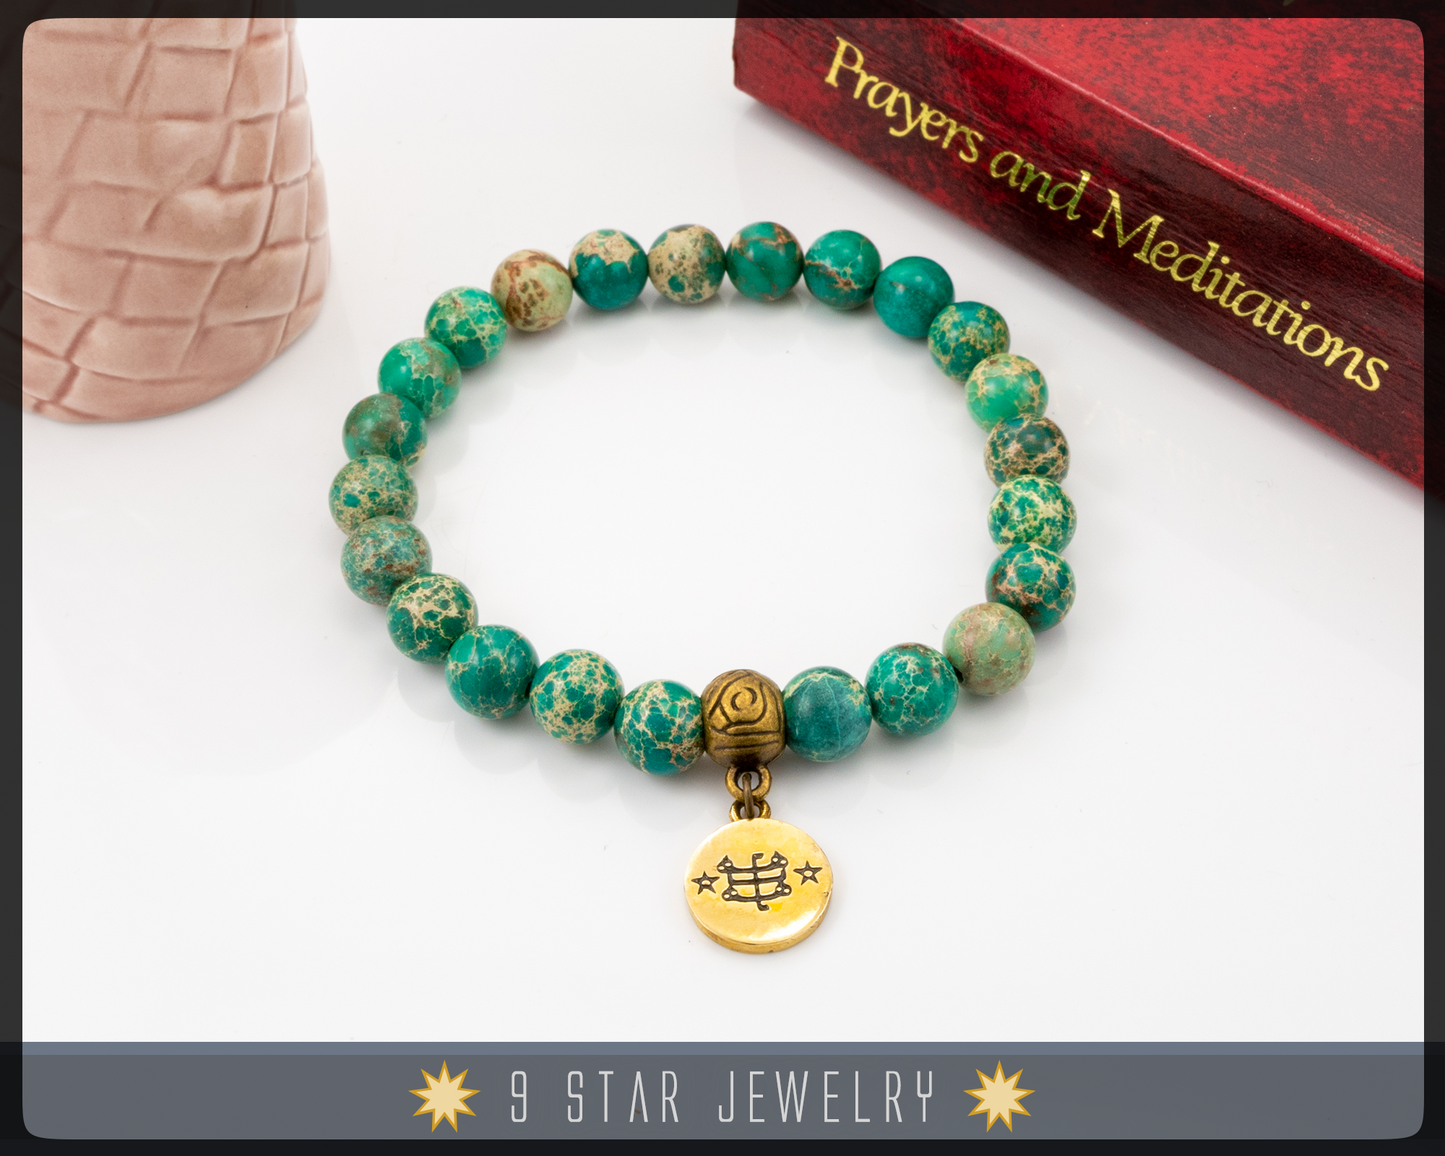 Green Sea Sediment Jasper Bracelet with Baha'i ringstone symbol "Adira"